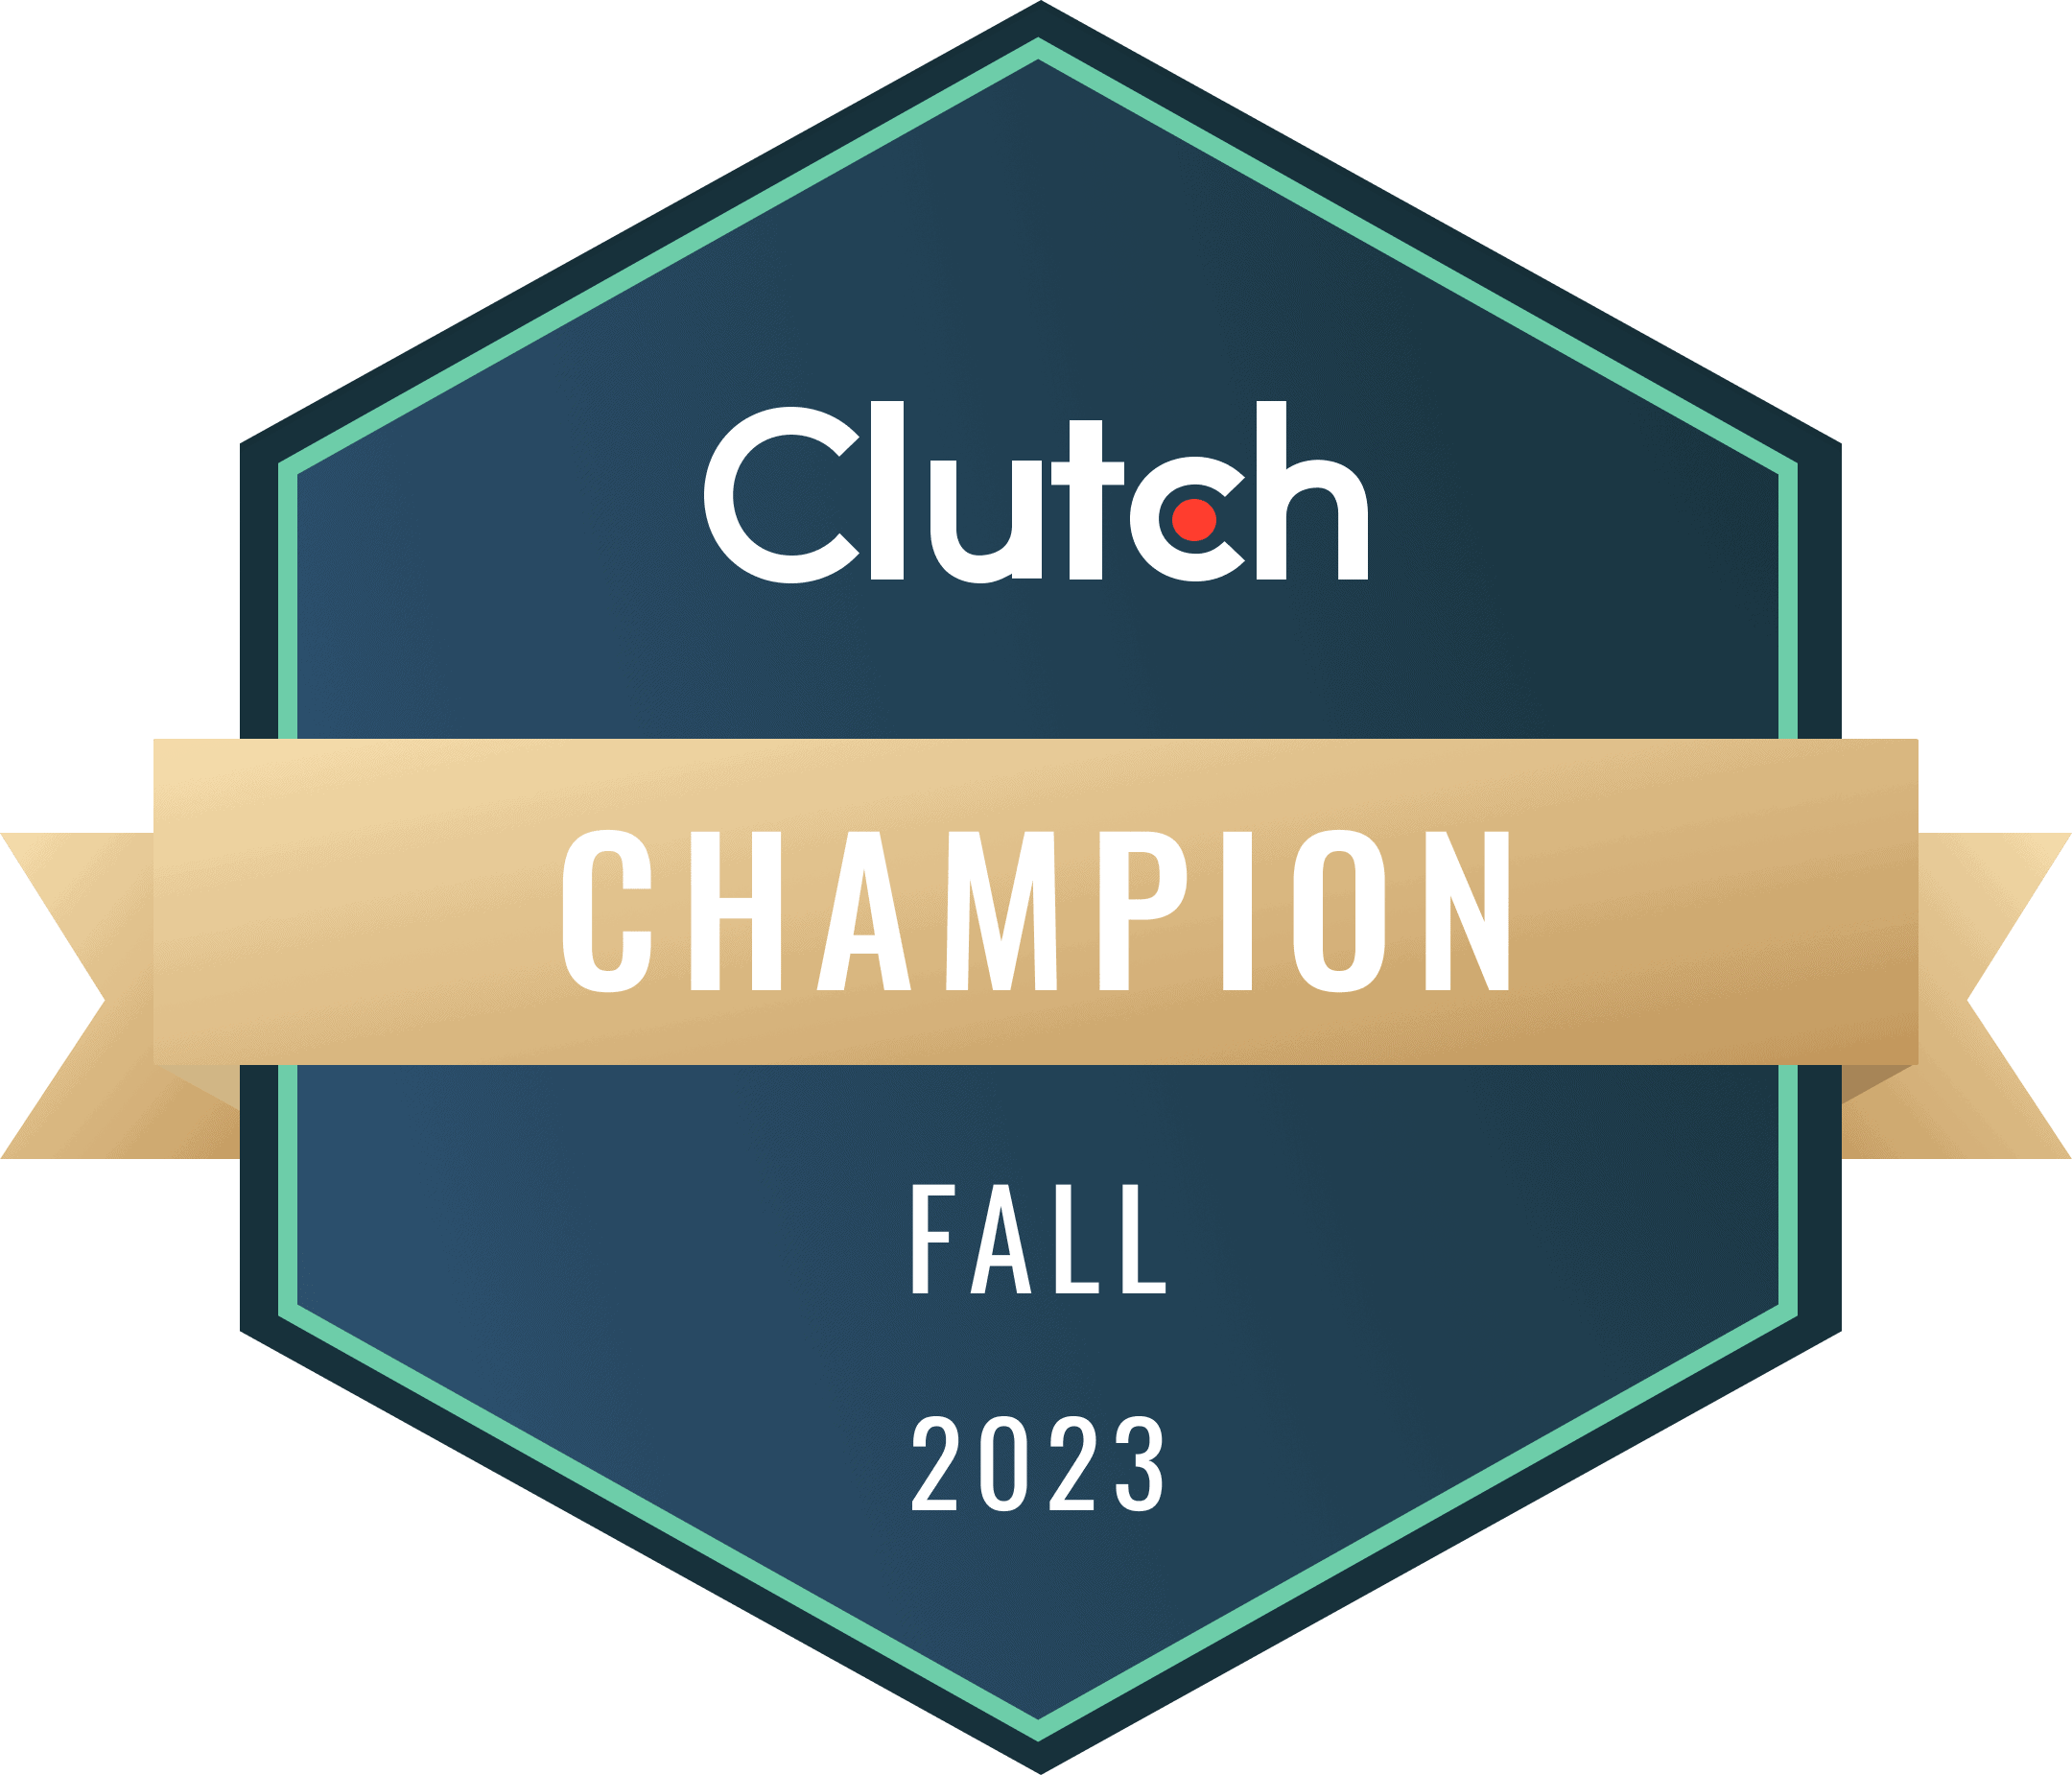 Clutch Chamption Fall 2023